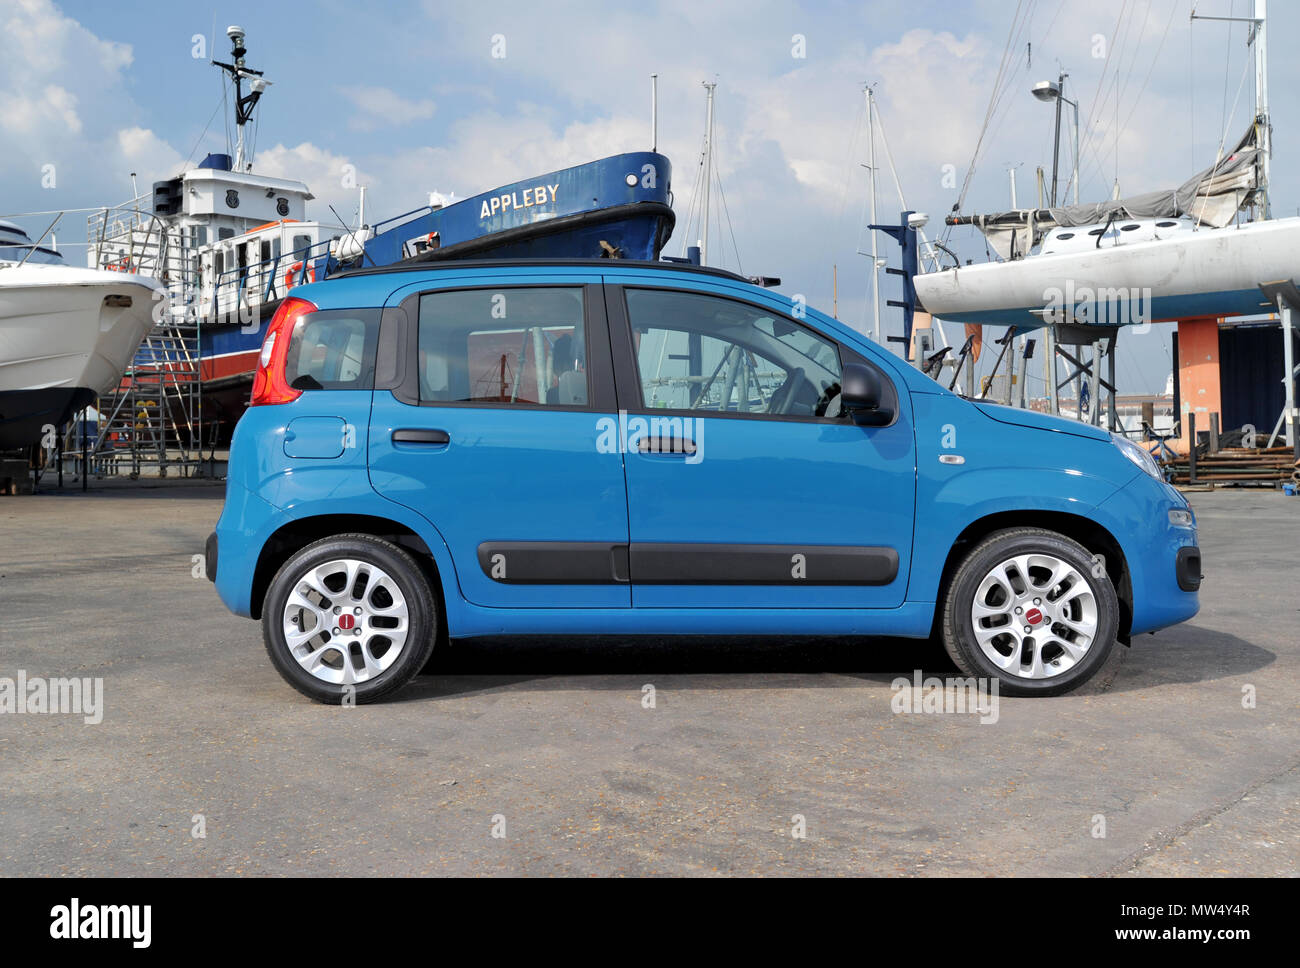 2012 Fiat Panda Italian compact city car Stock Photo